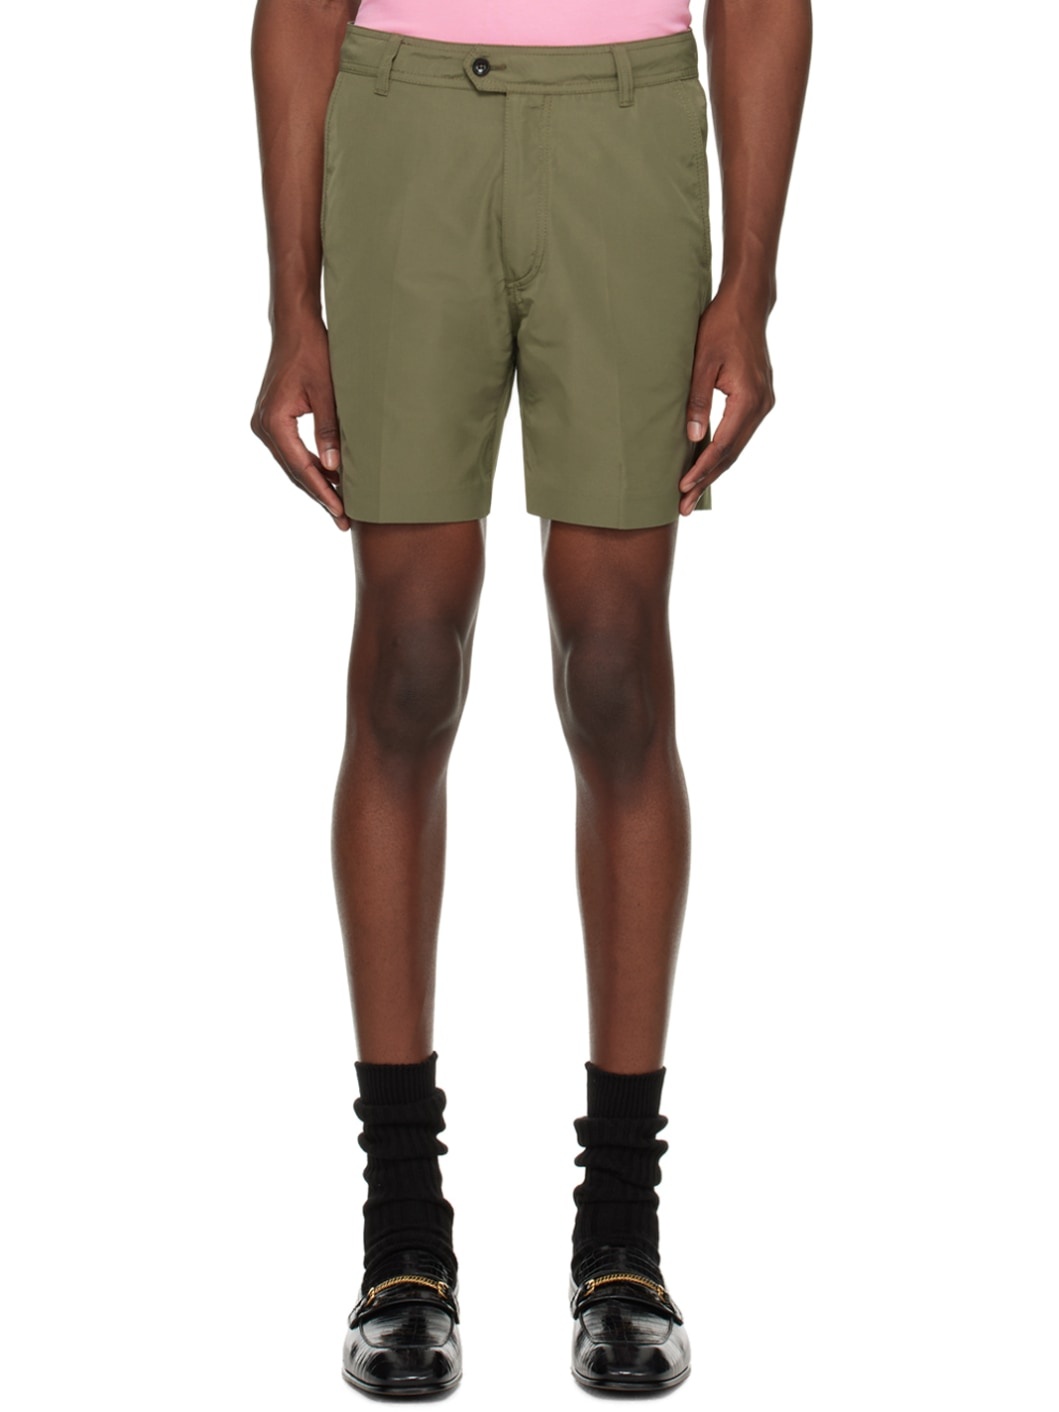 Green Technical Shorts - 1